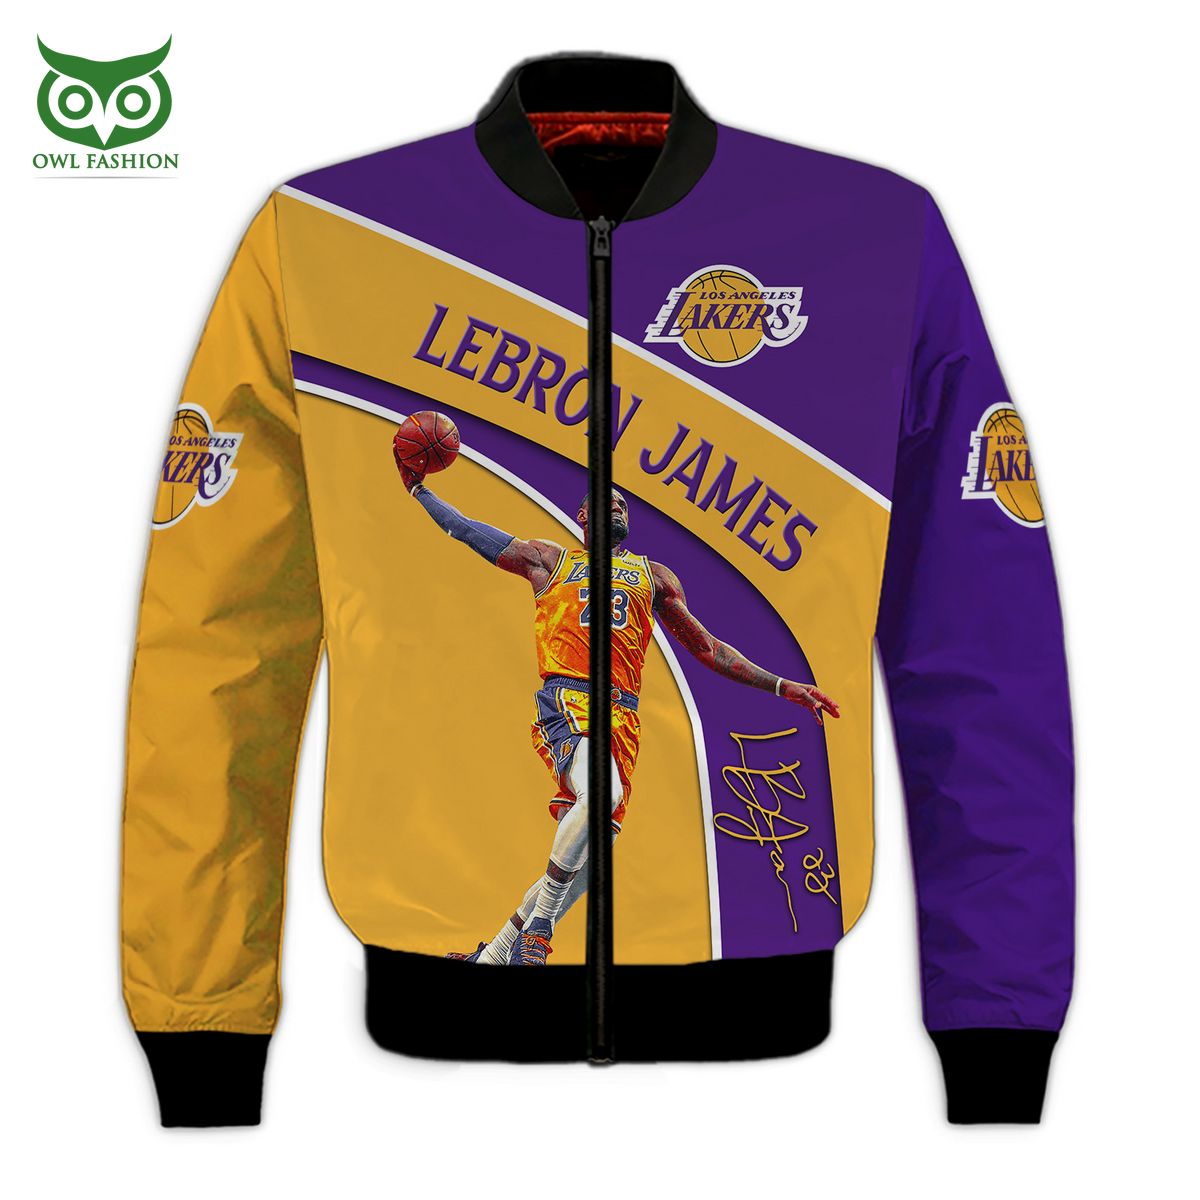 Cheap Price NBA Basketball Los Angeles Lakers Men's T-shirt 3D